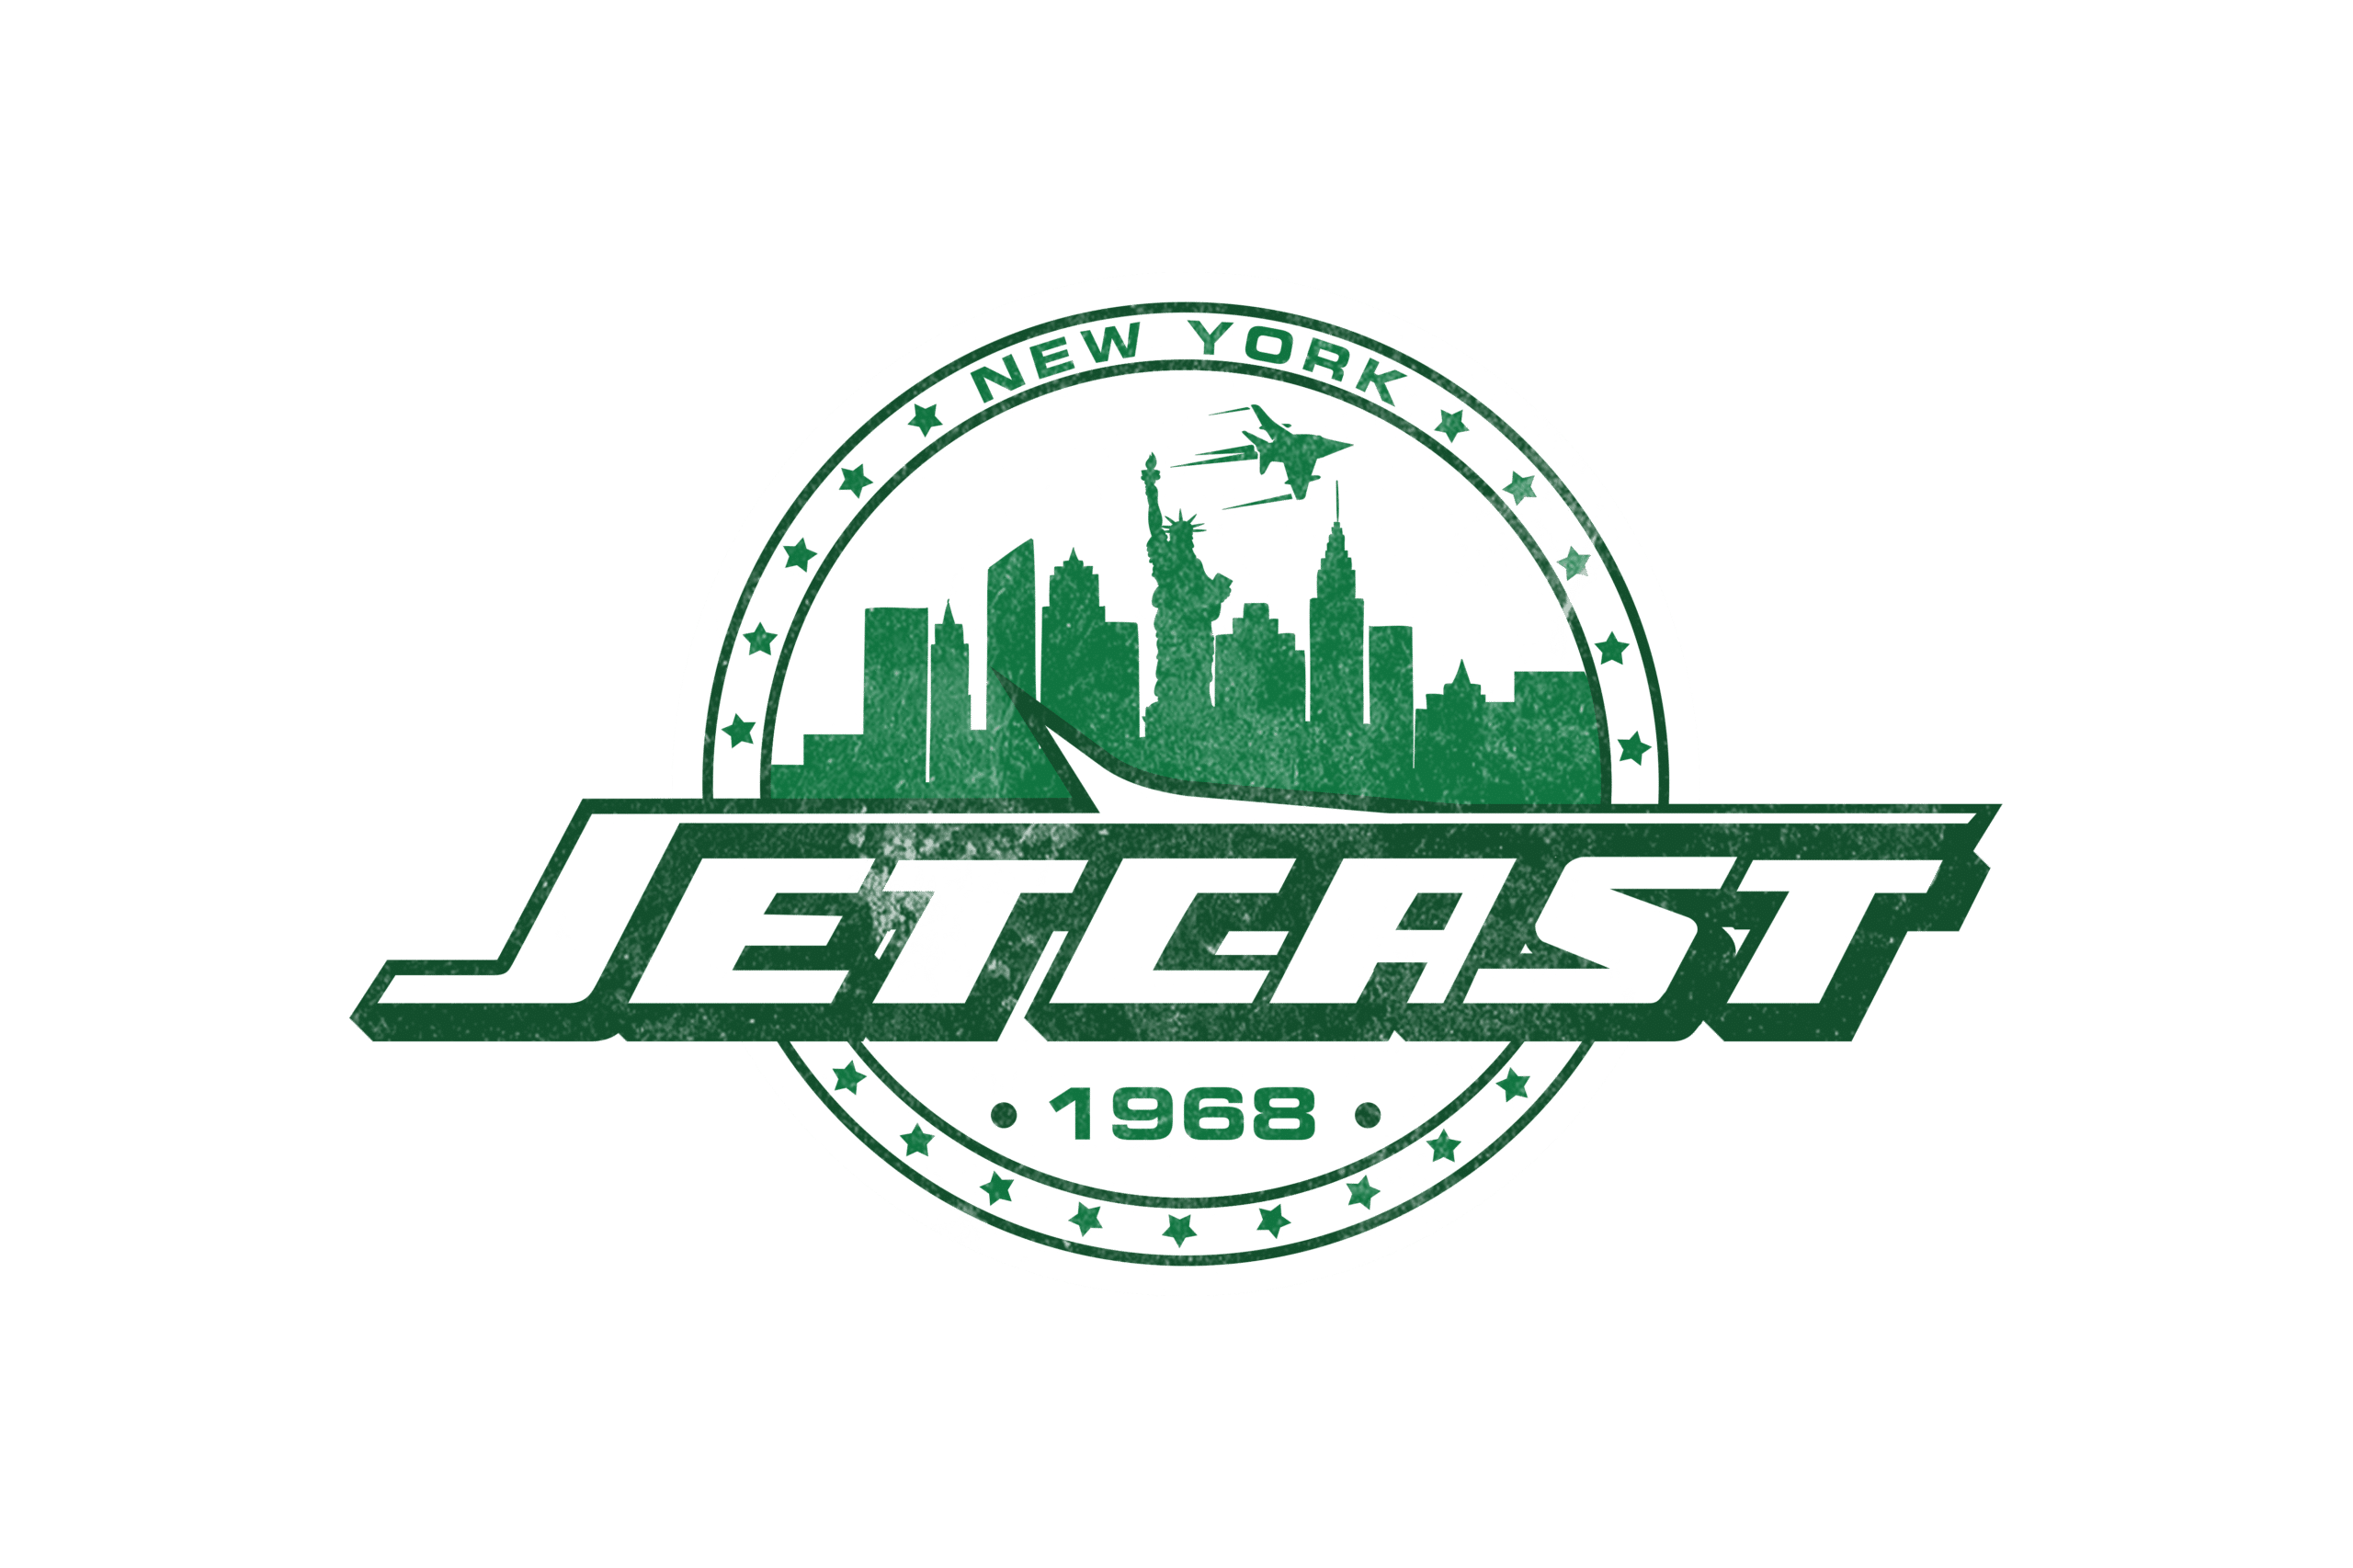 New York Jets Podcast